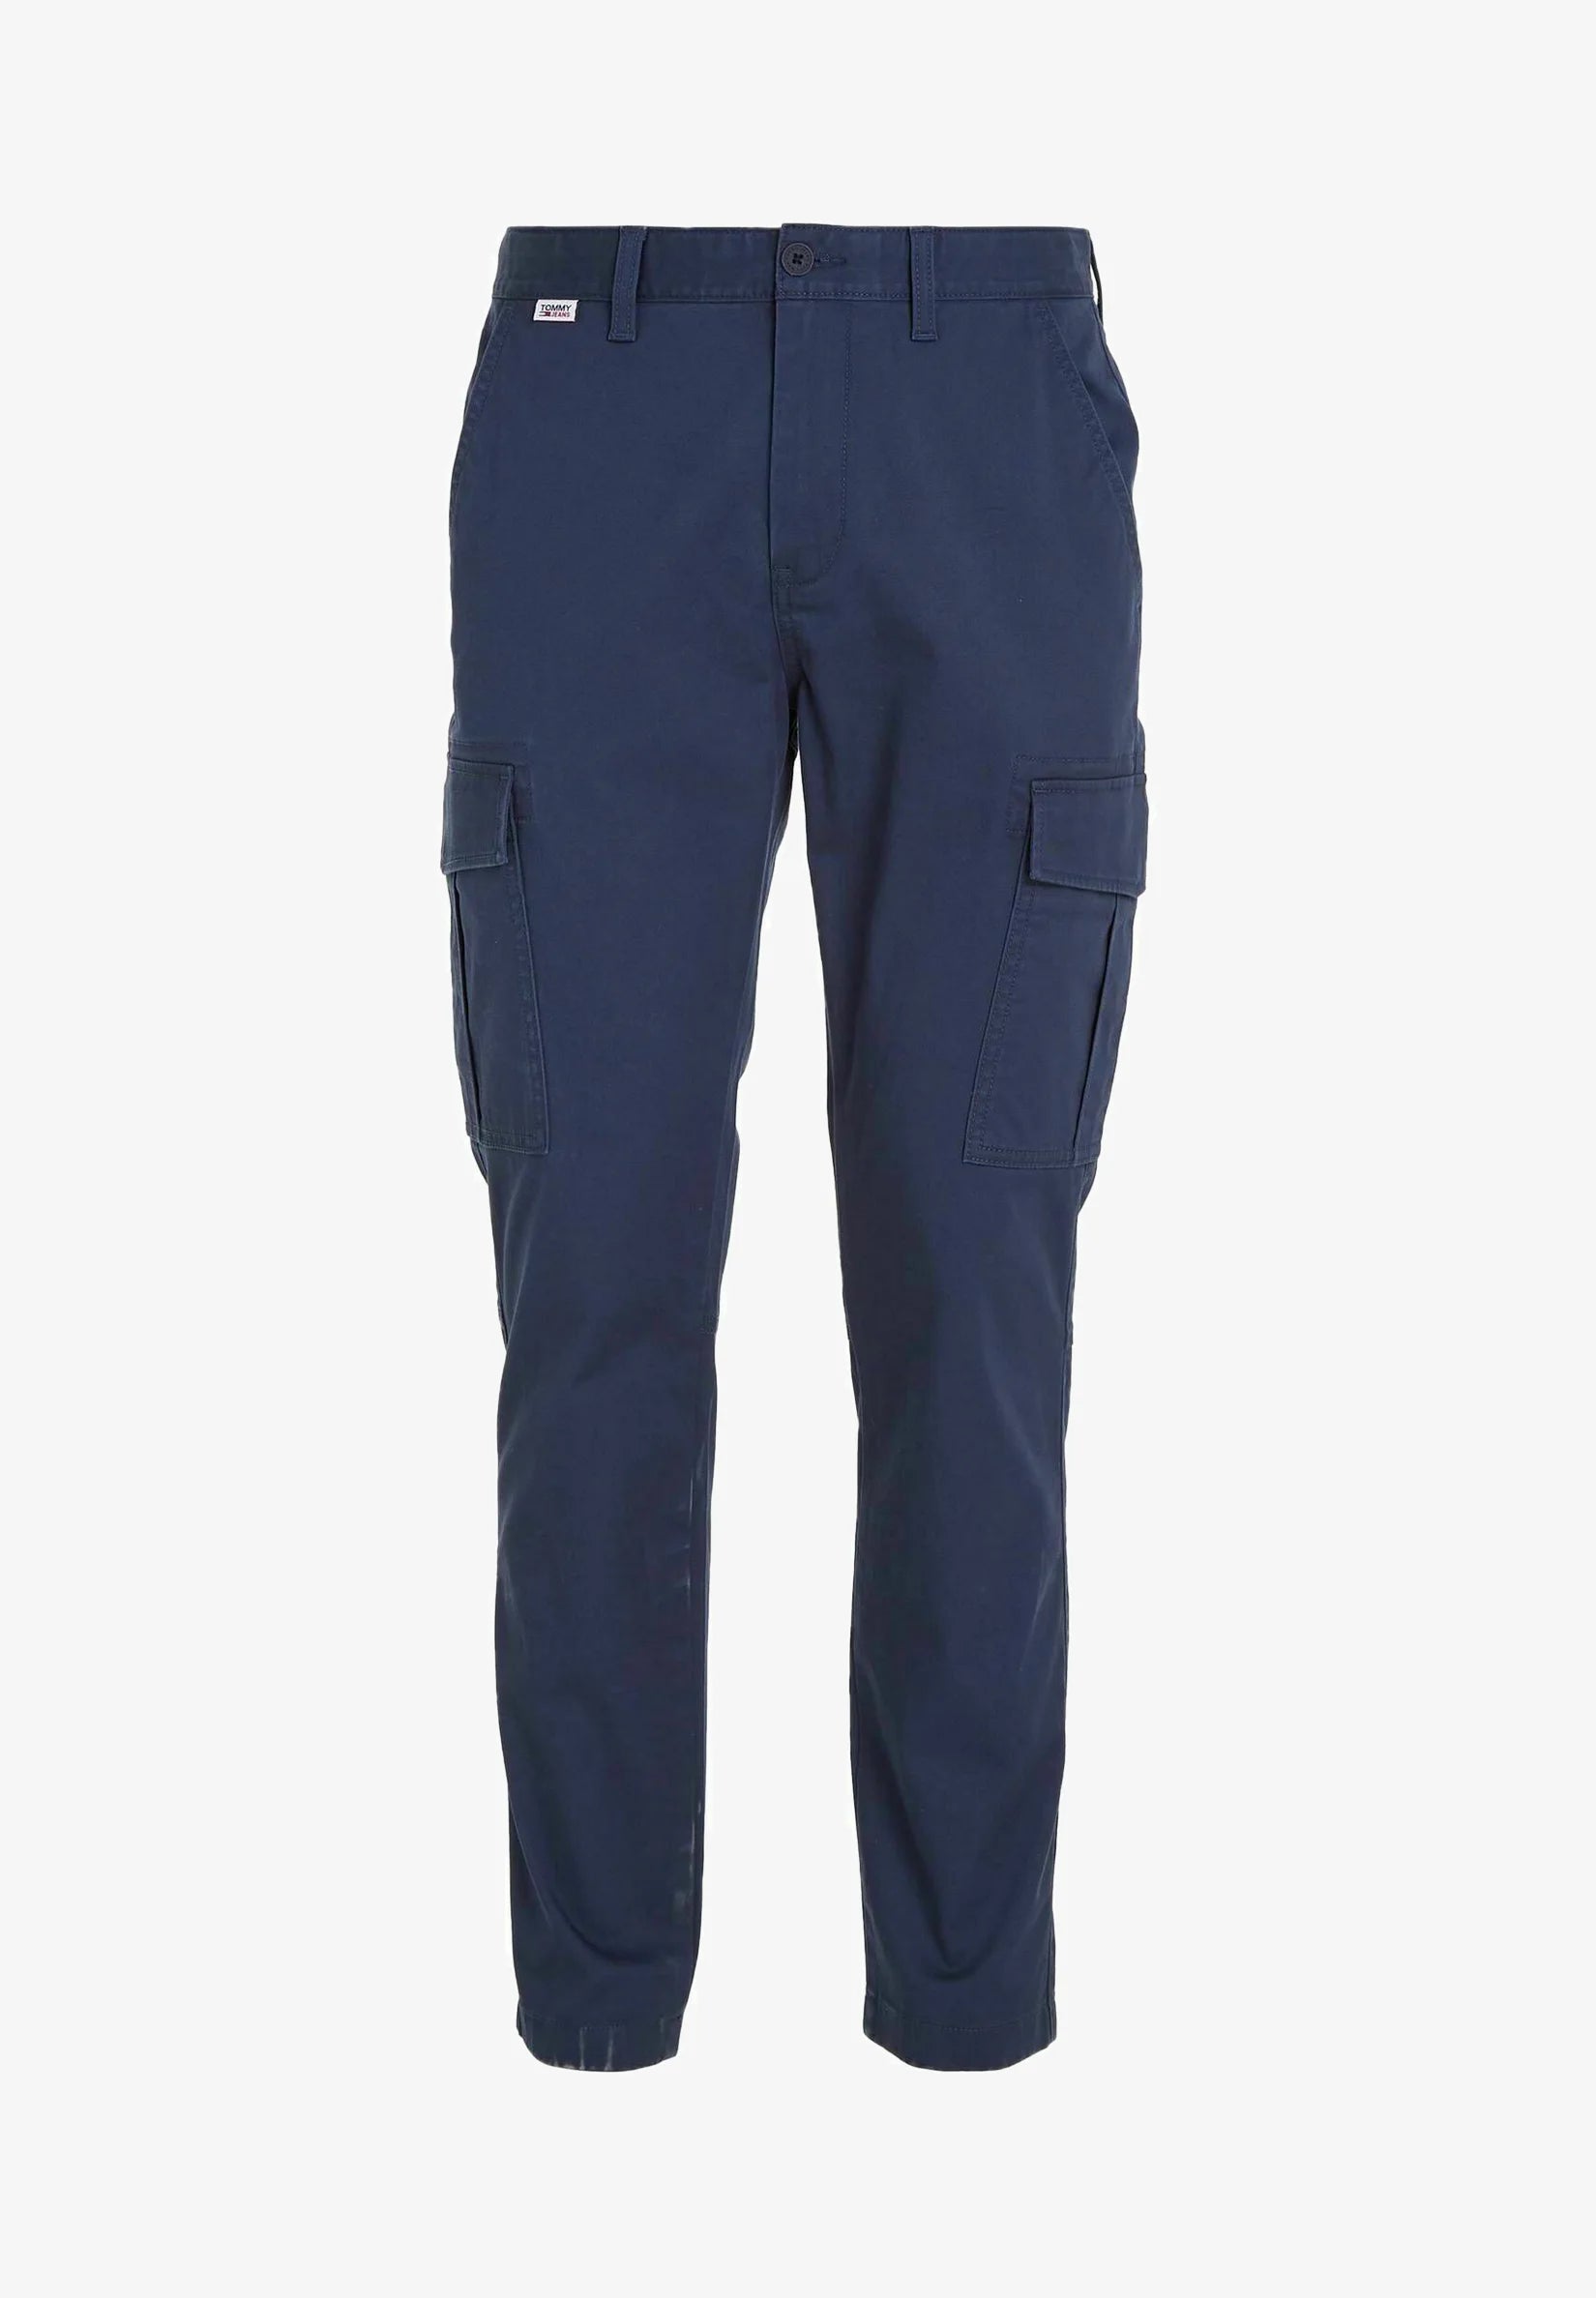 Pantalon cargo Tommy Jeans marine en coton bio stretch | Georgespaul